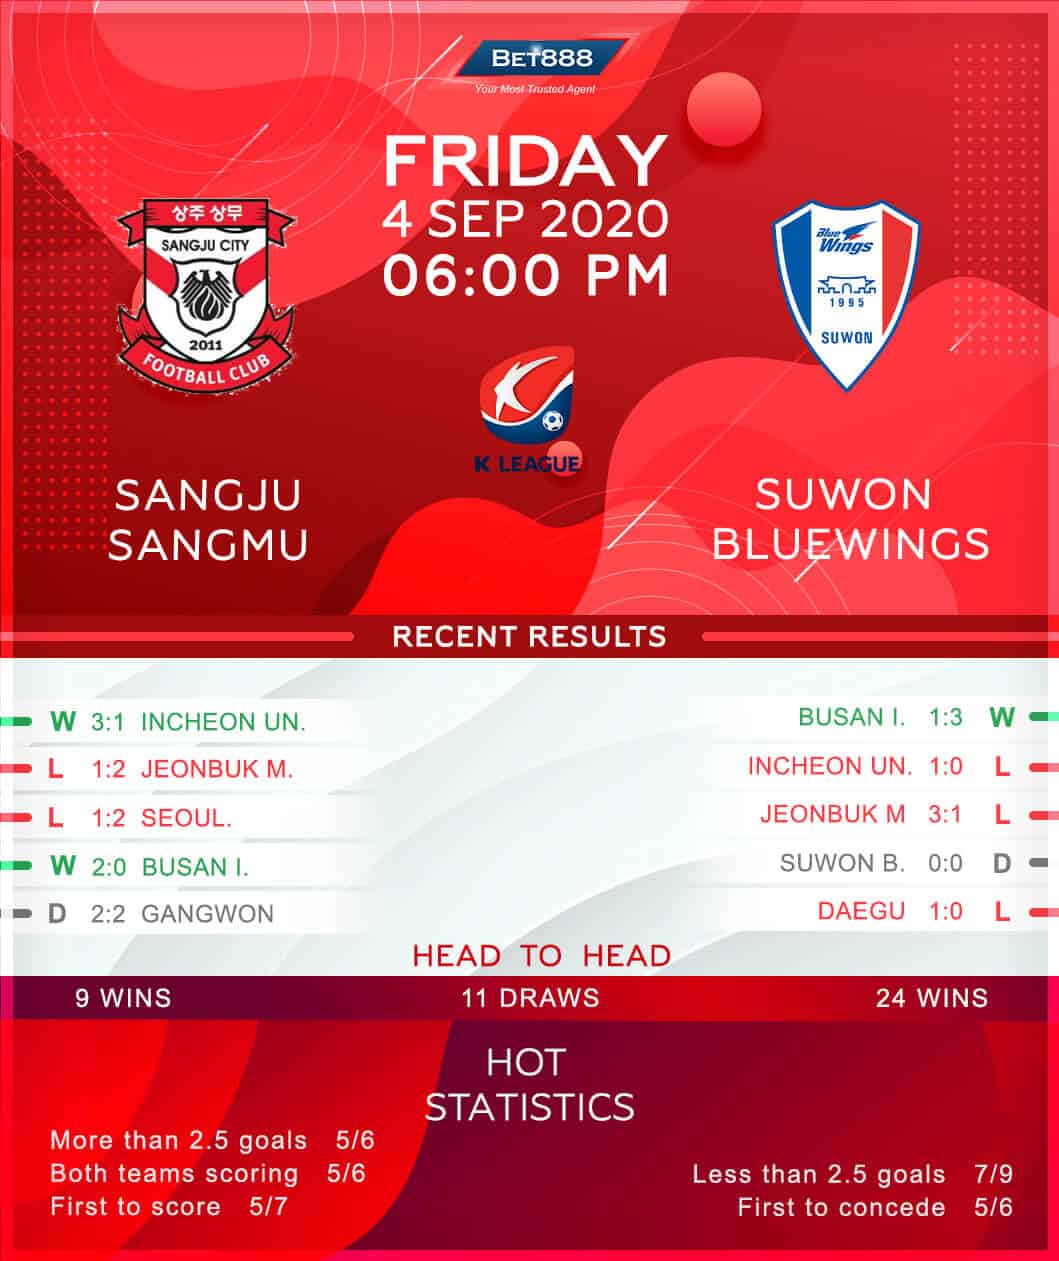 Sangju Sangmu vs Suwon Bluewings 04/09/20